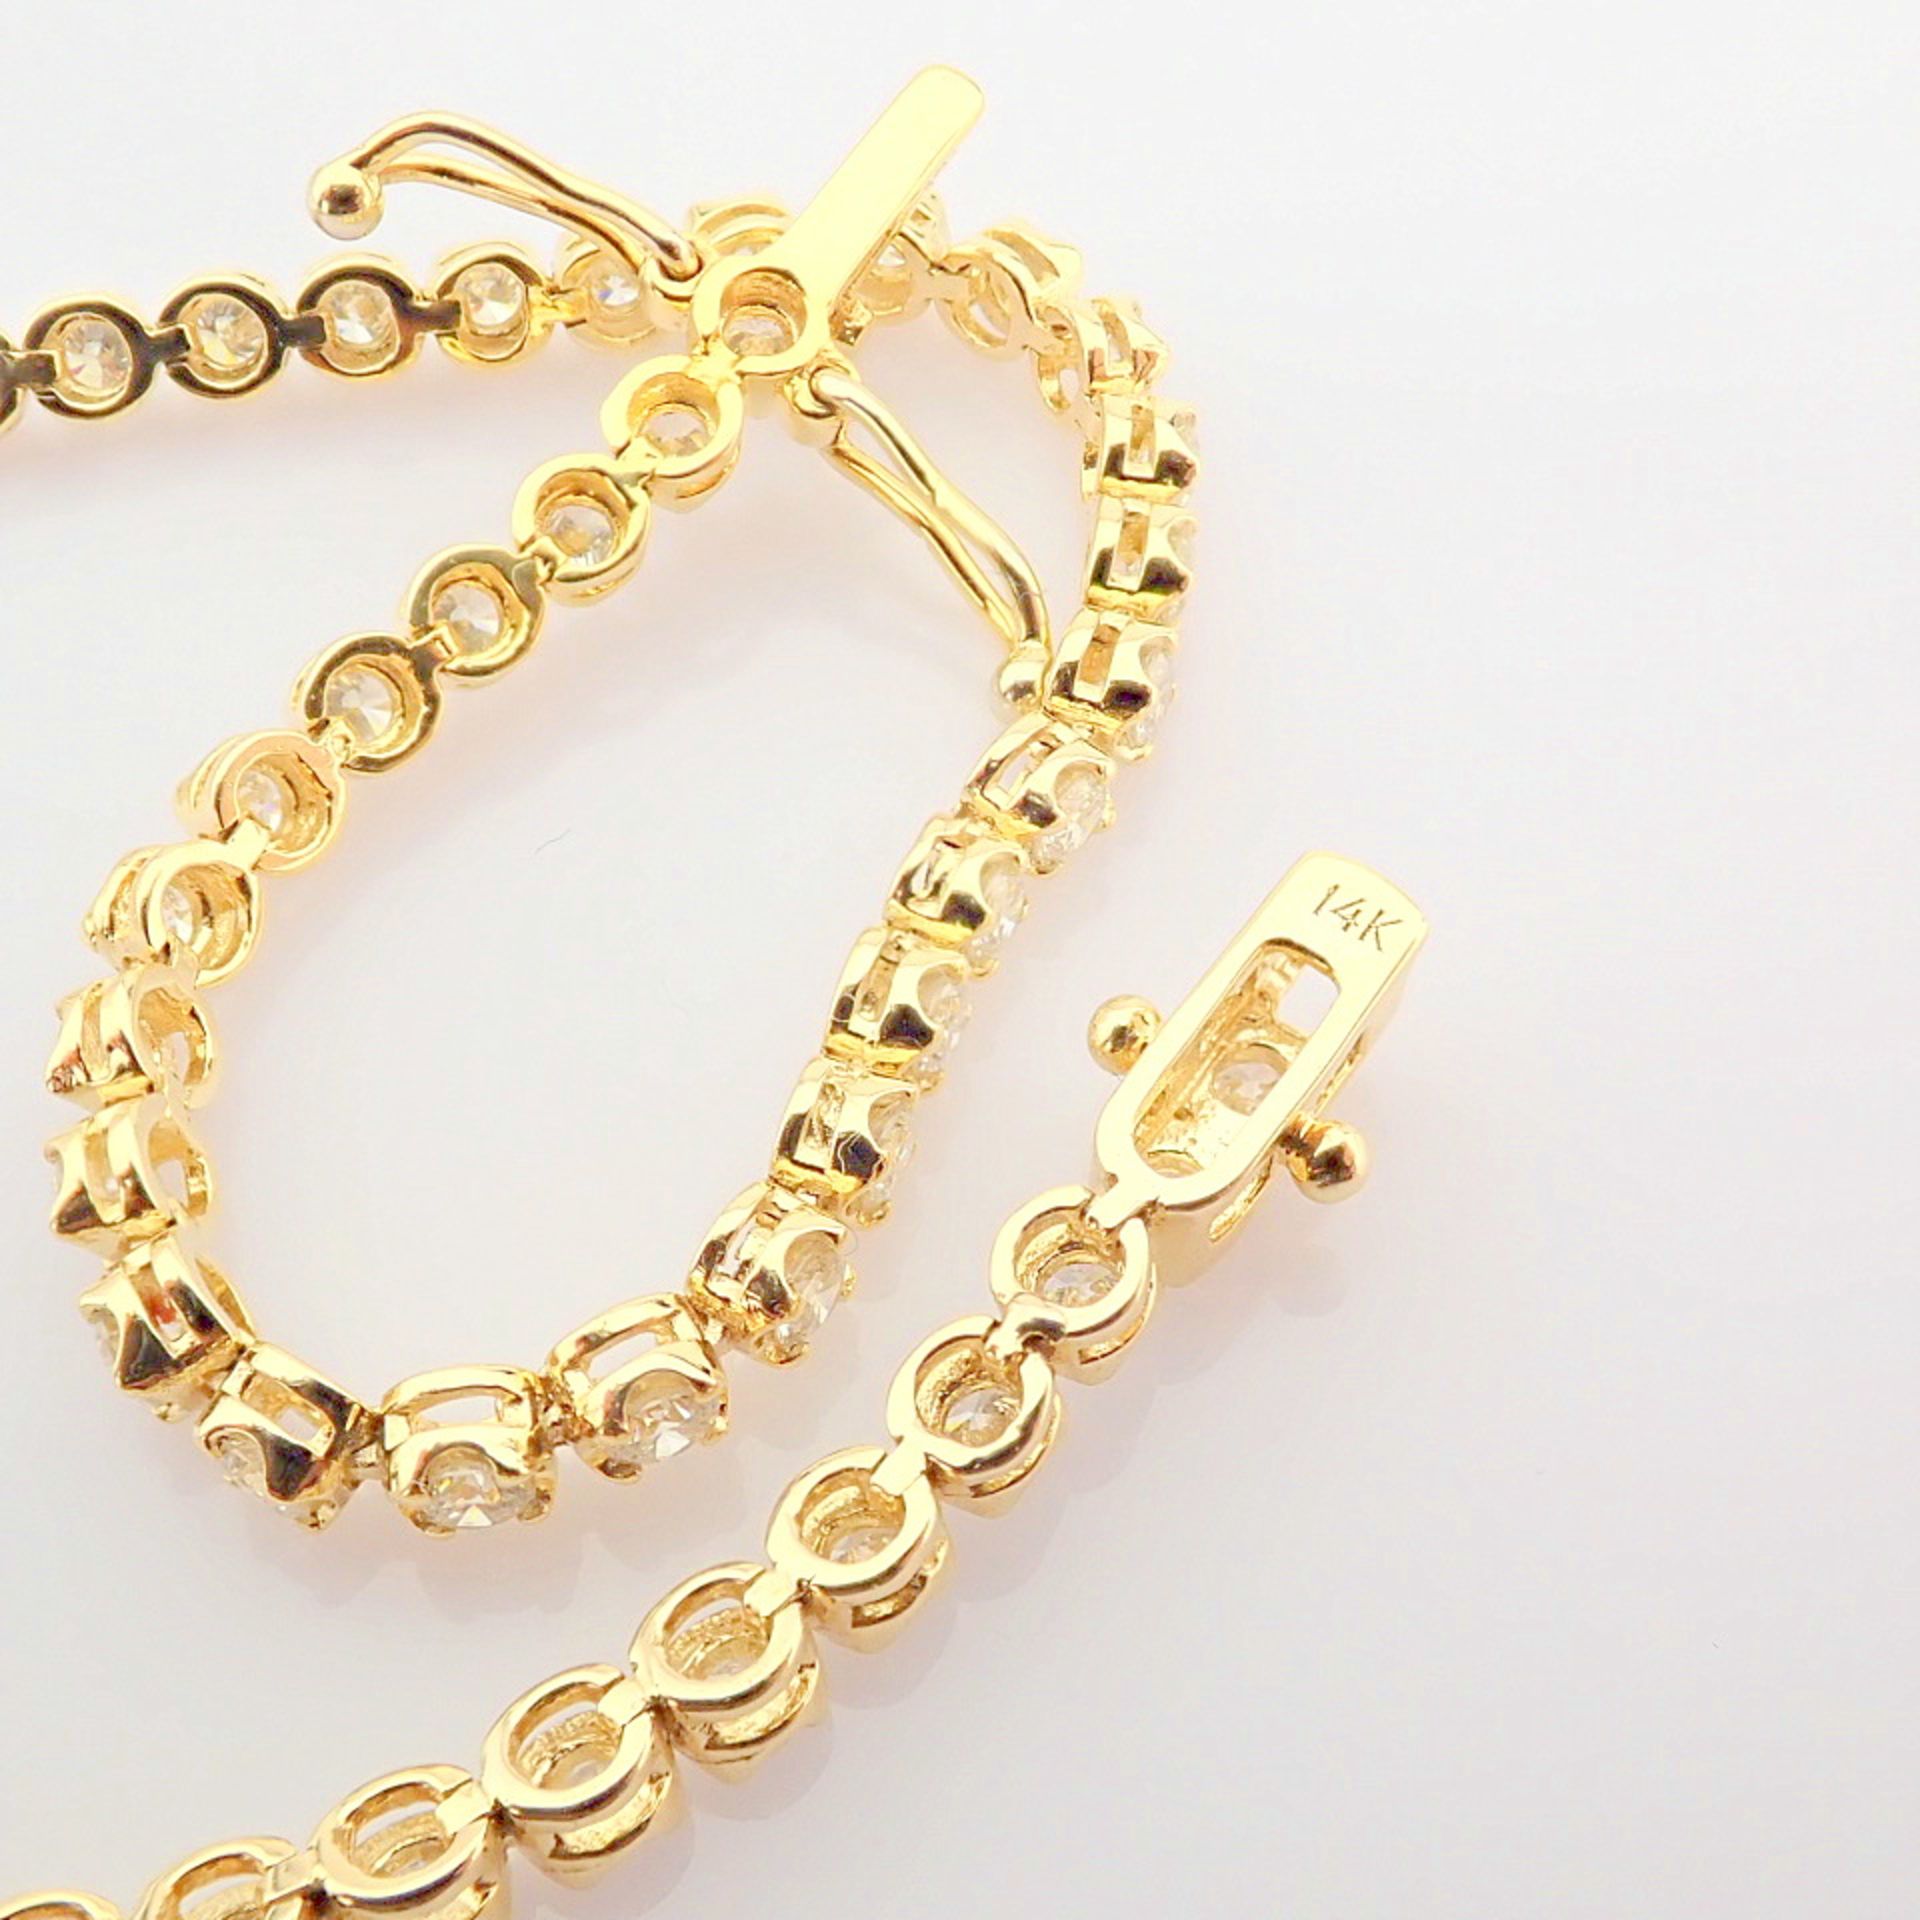 2,10 Ct. Diamond Tennis Bracelet (Crown) - 14K Yellow Gold - Image 5 of 14